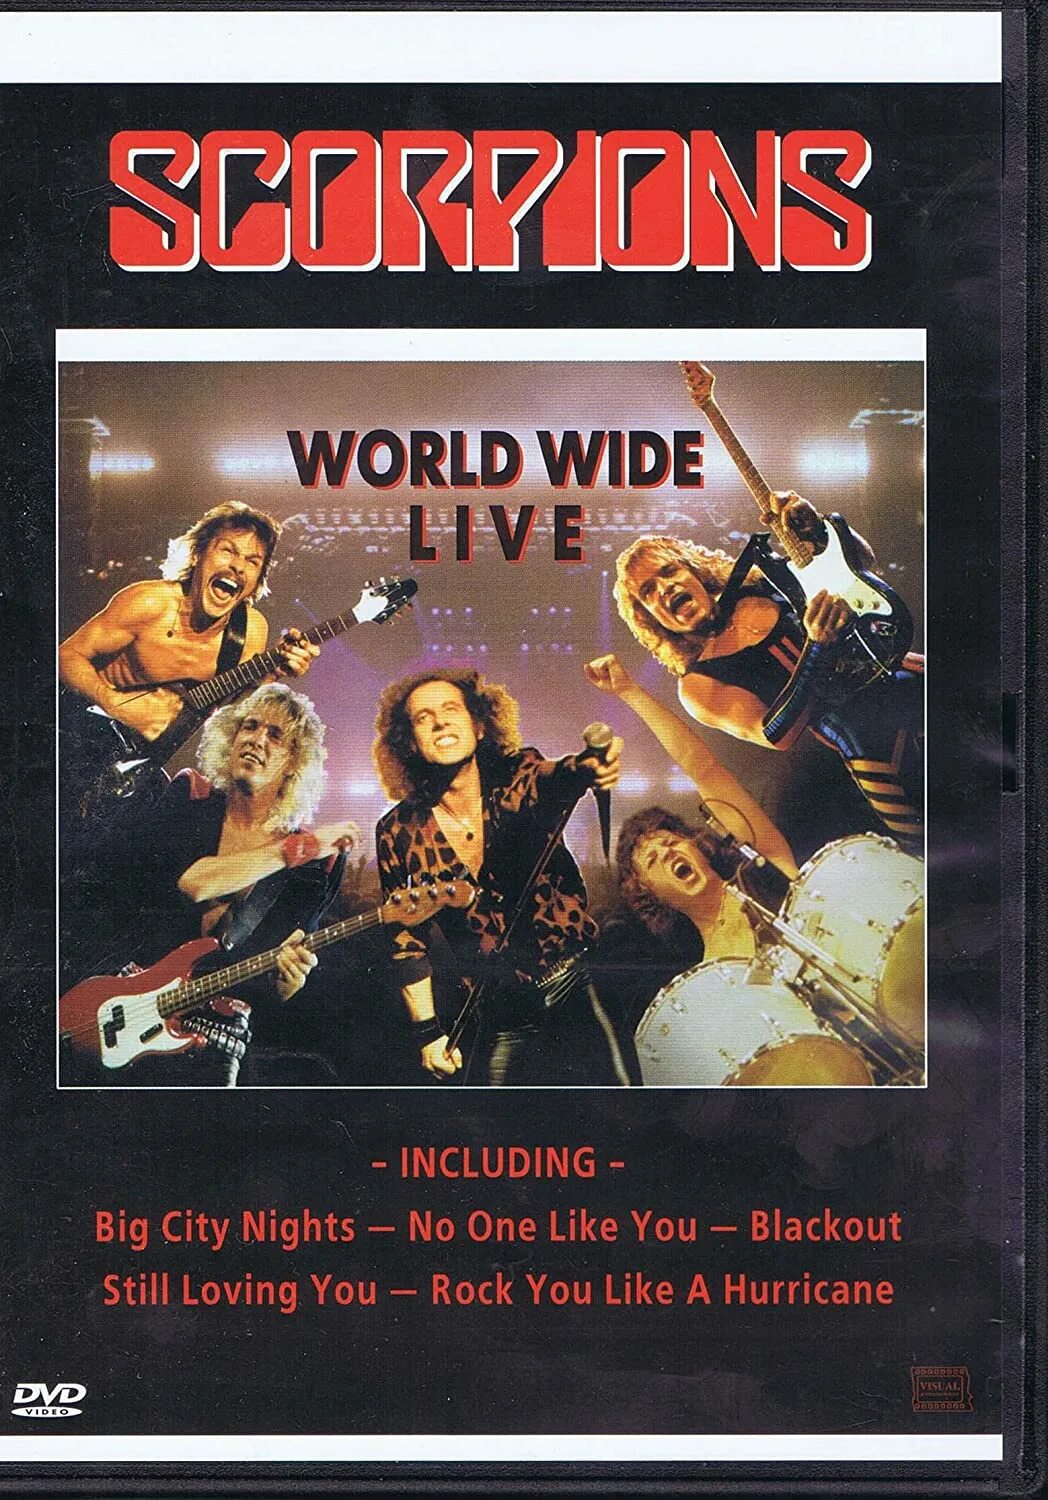 Scorpions World wide Live 1985. Scorpions "World wide Live". World wide Live Scorpions винил. The World wide Live 1985.